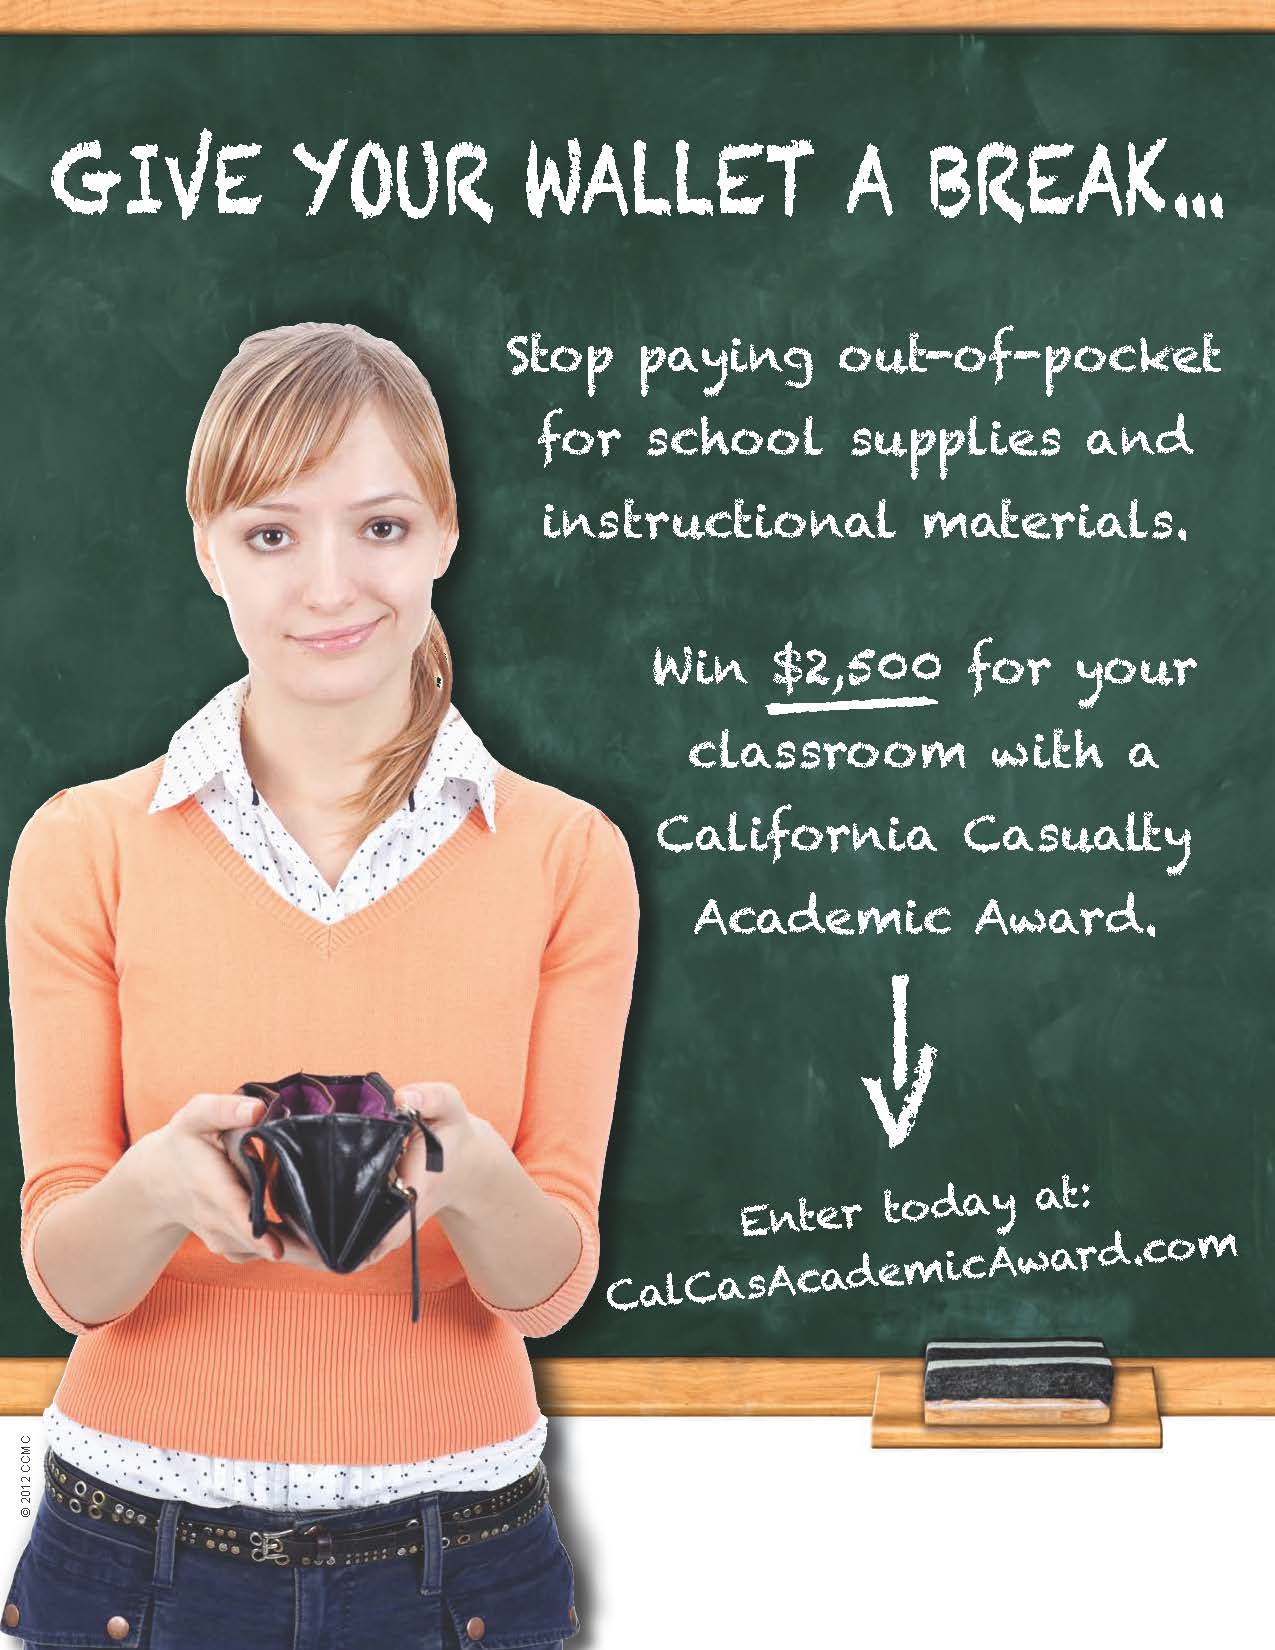 California Casualty's $2,500 Academic Award